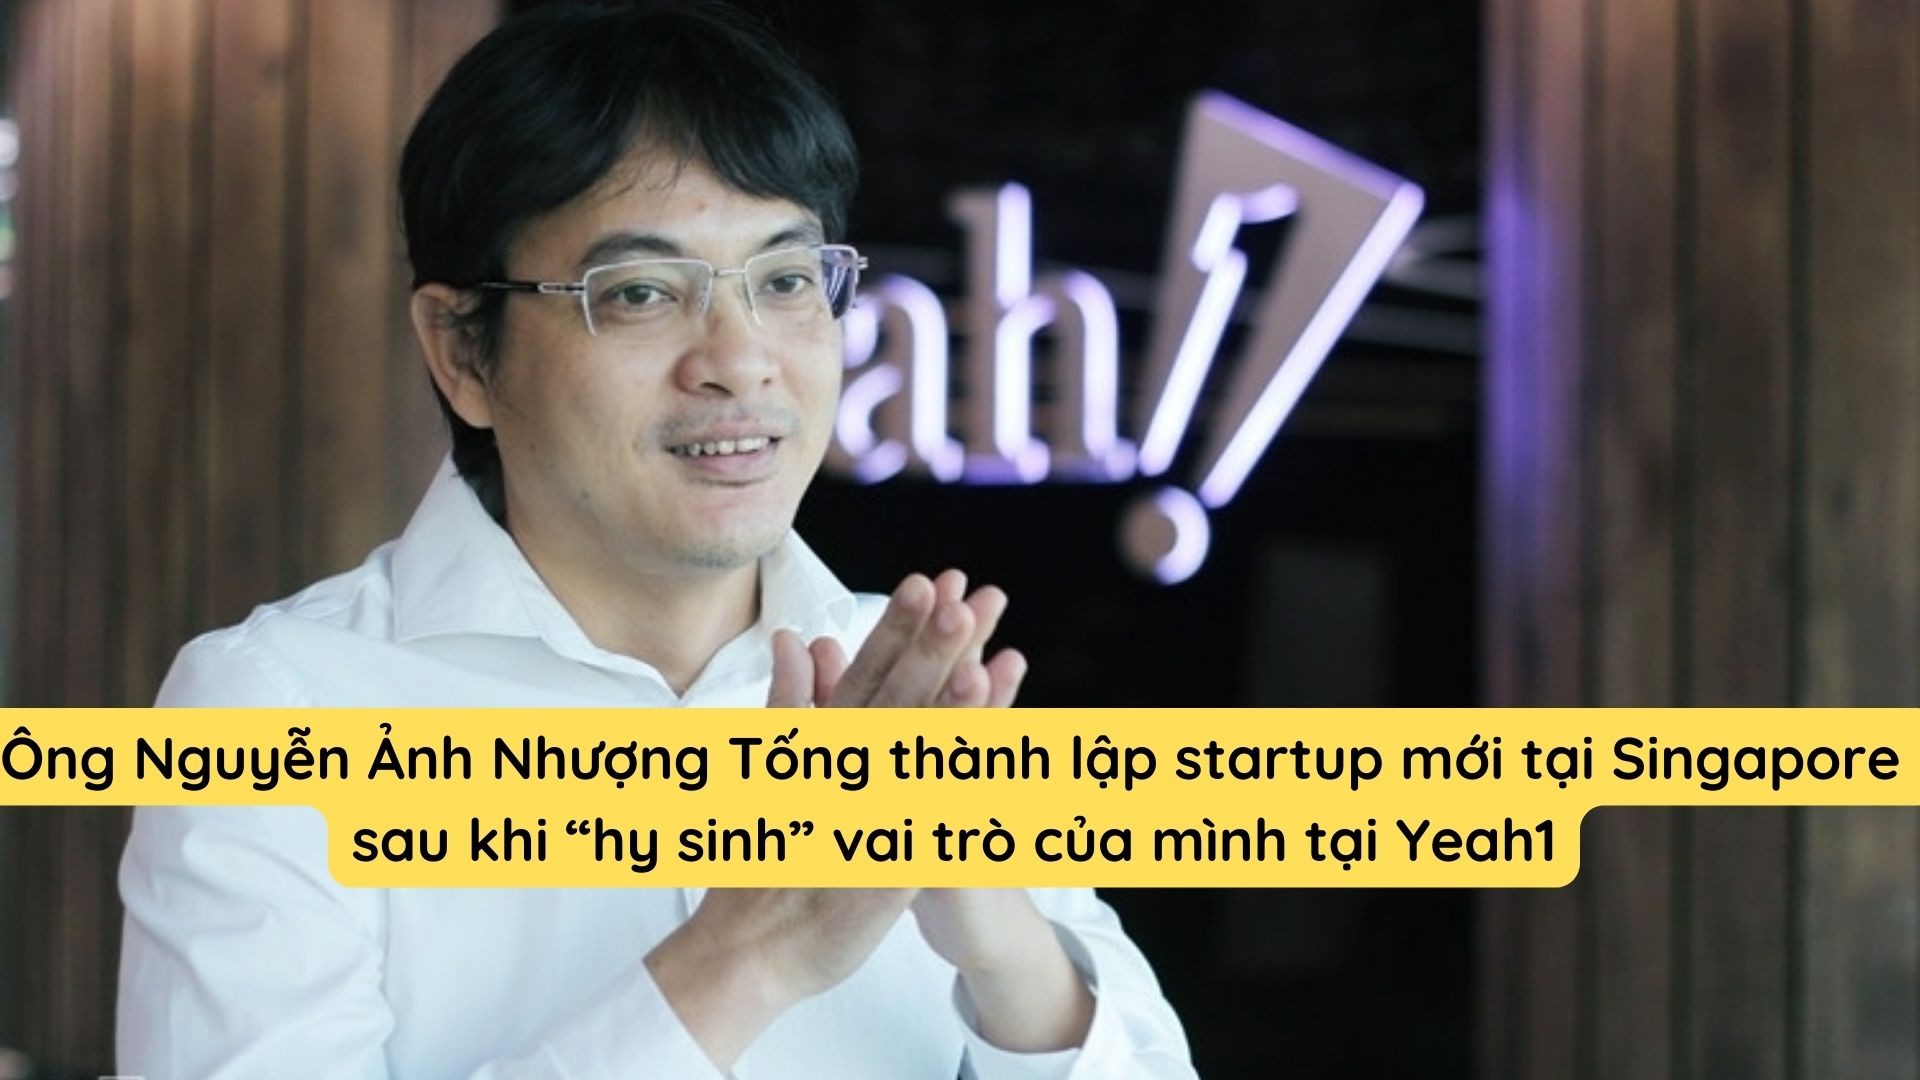 ong-nguyen-anh-nhuong-tong-thanh-lap-startup-moi-tai-singapore-sau-khi-hy-sinh-vai-tro-cua-minh-tai-yeah1-1-1671383464.jpg